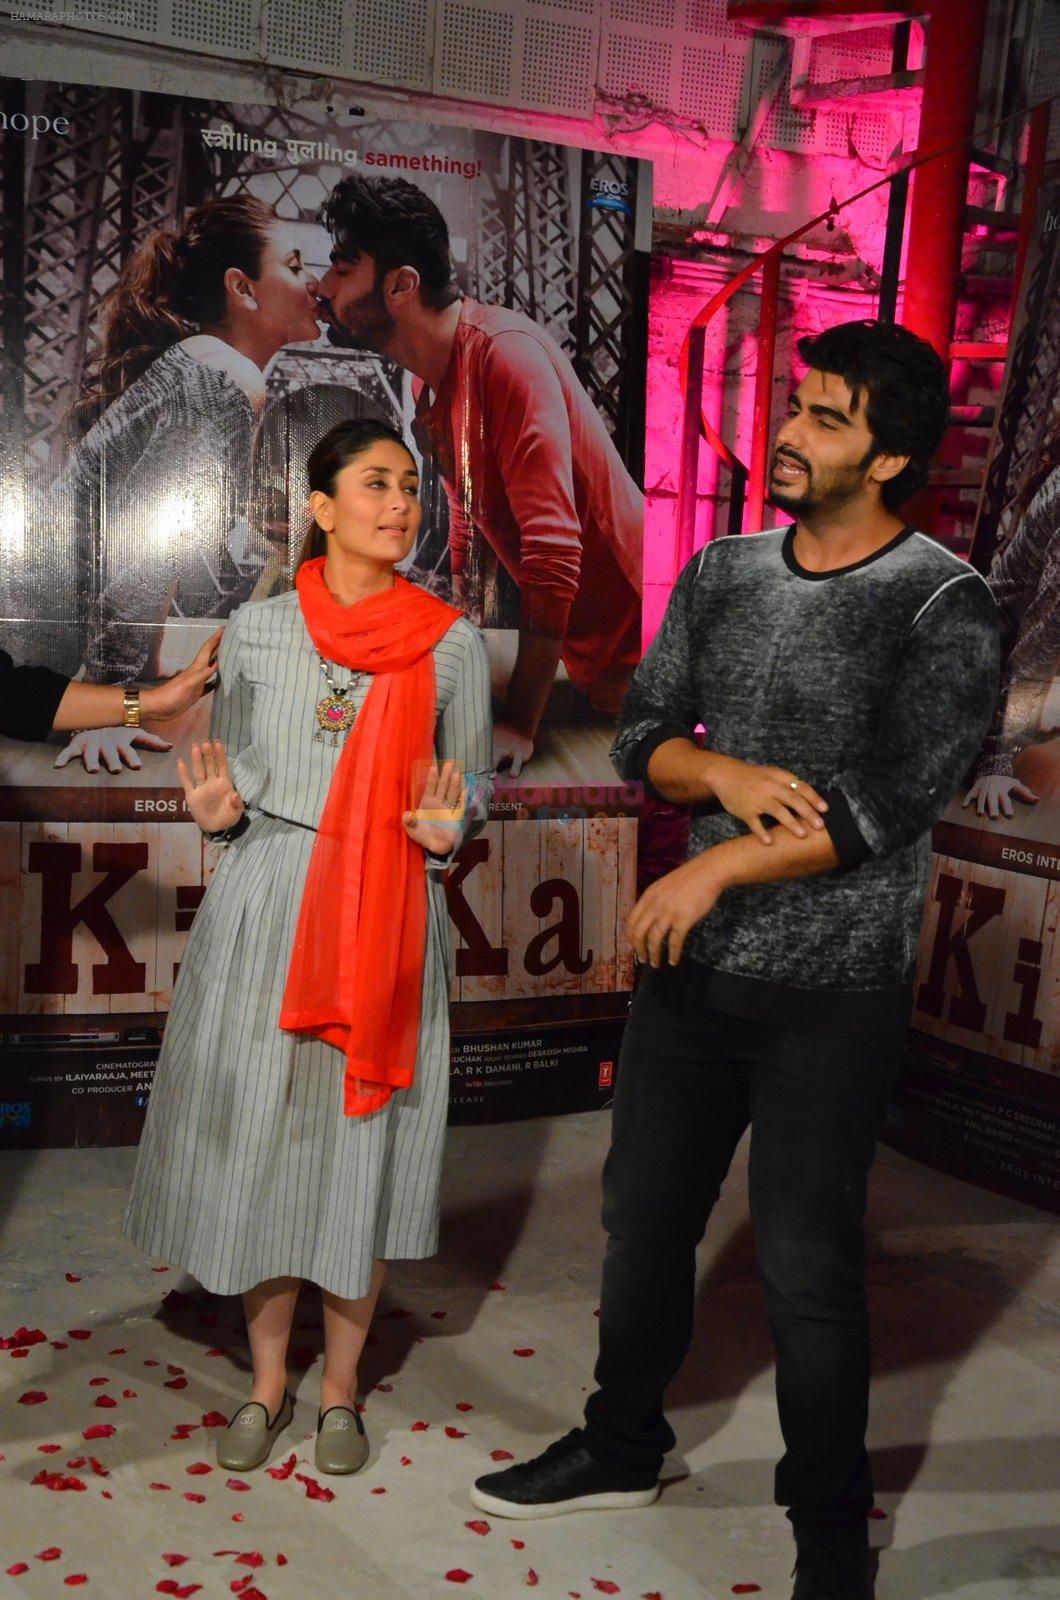 Kareena Kapoor and Arjun Kapoor exclusive photo shoot on 20th March 2016